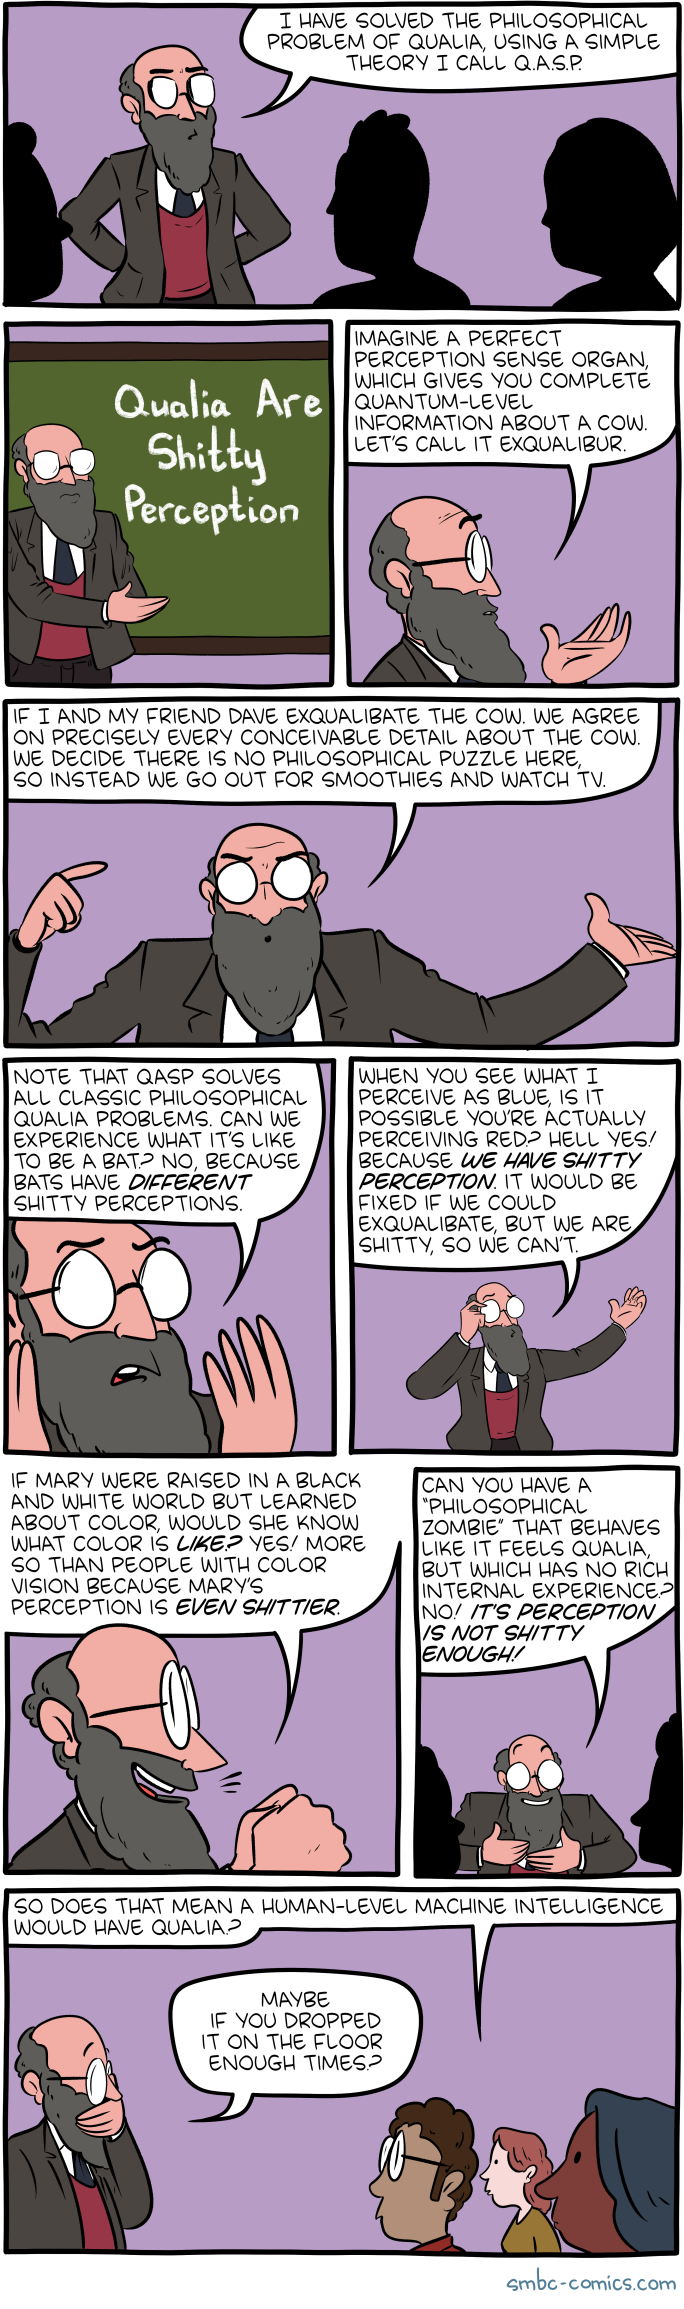 Needless jargon was added as an homage to Daniel Dennett.